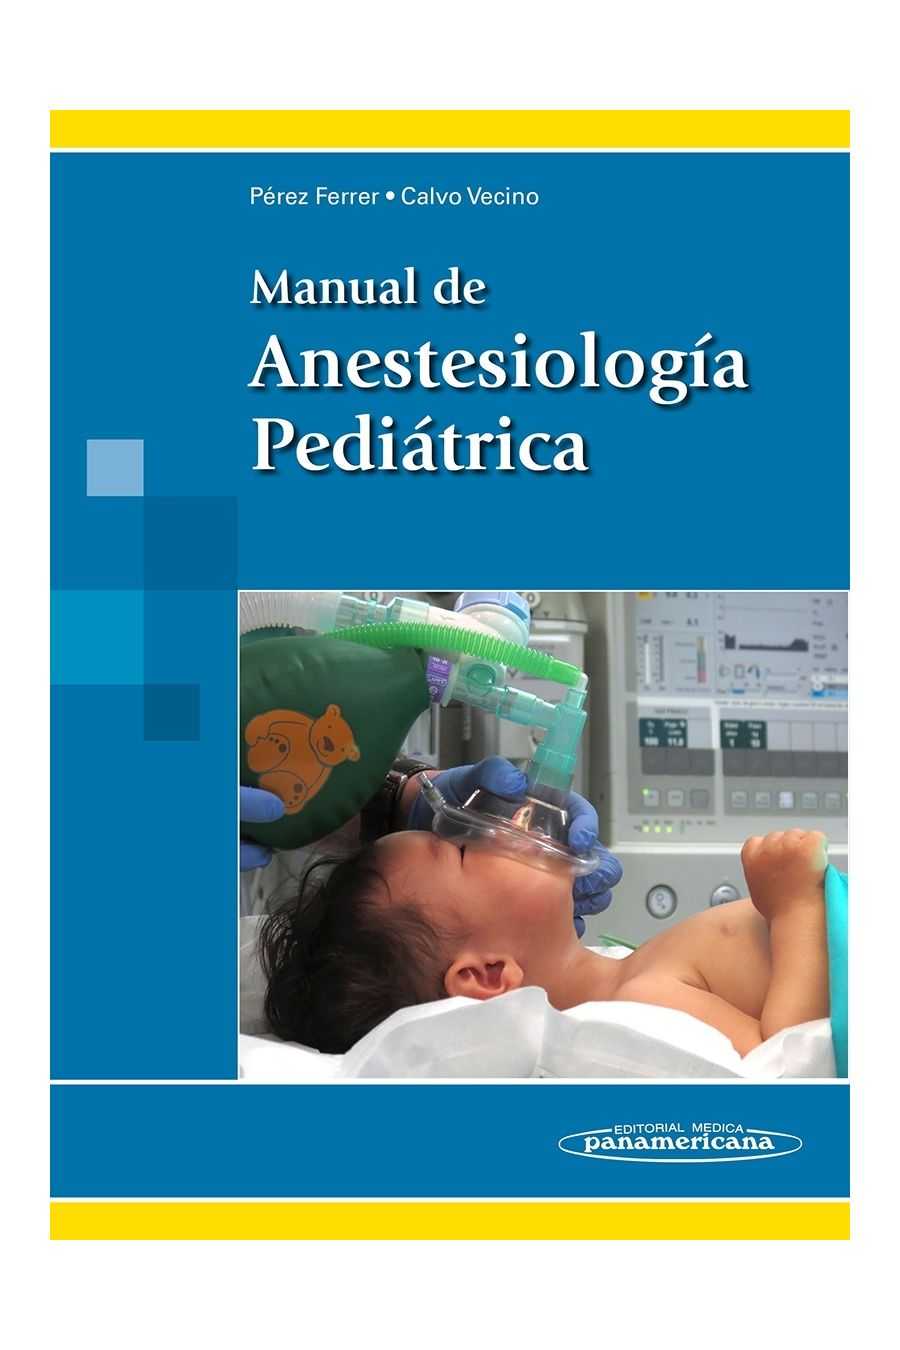 Manual de Anestesiología Pediátrica. Ferrer